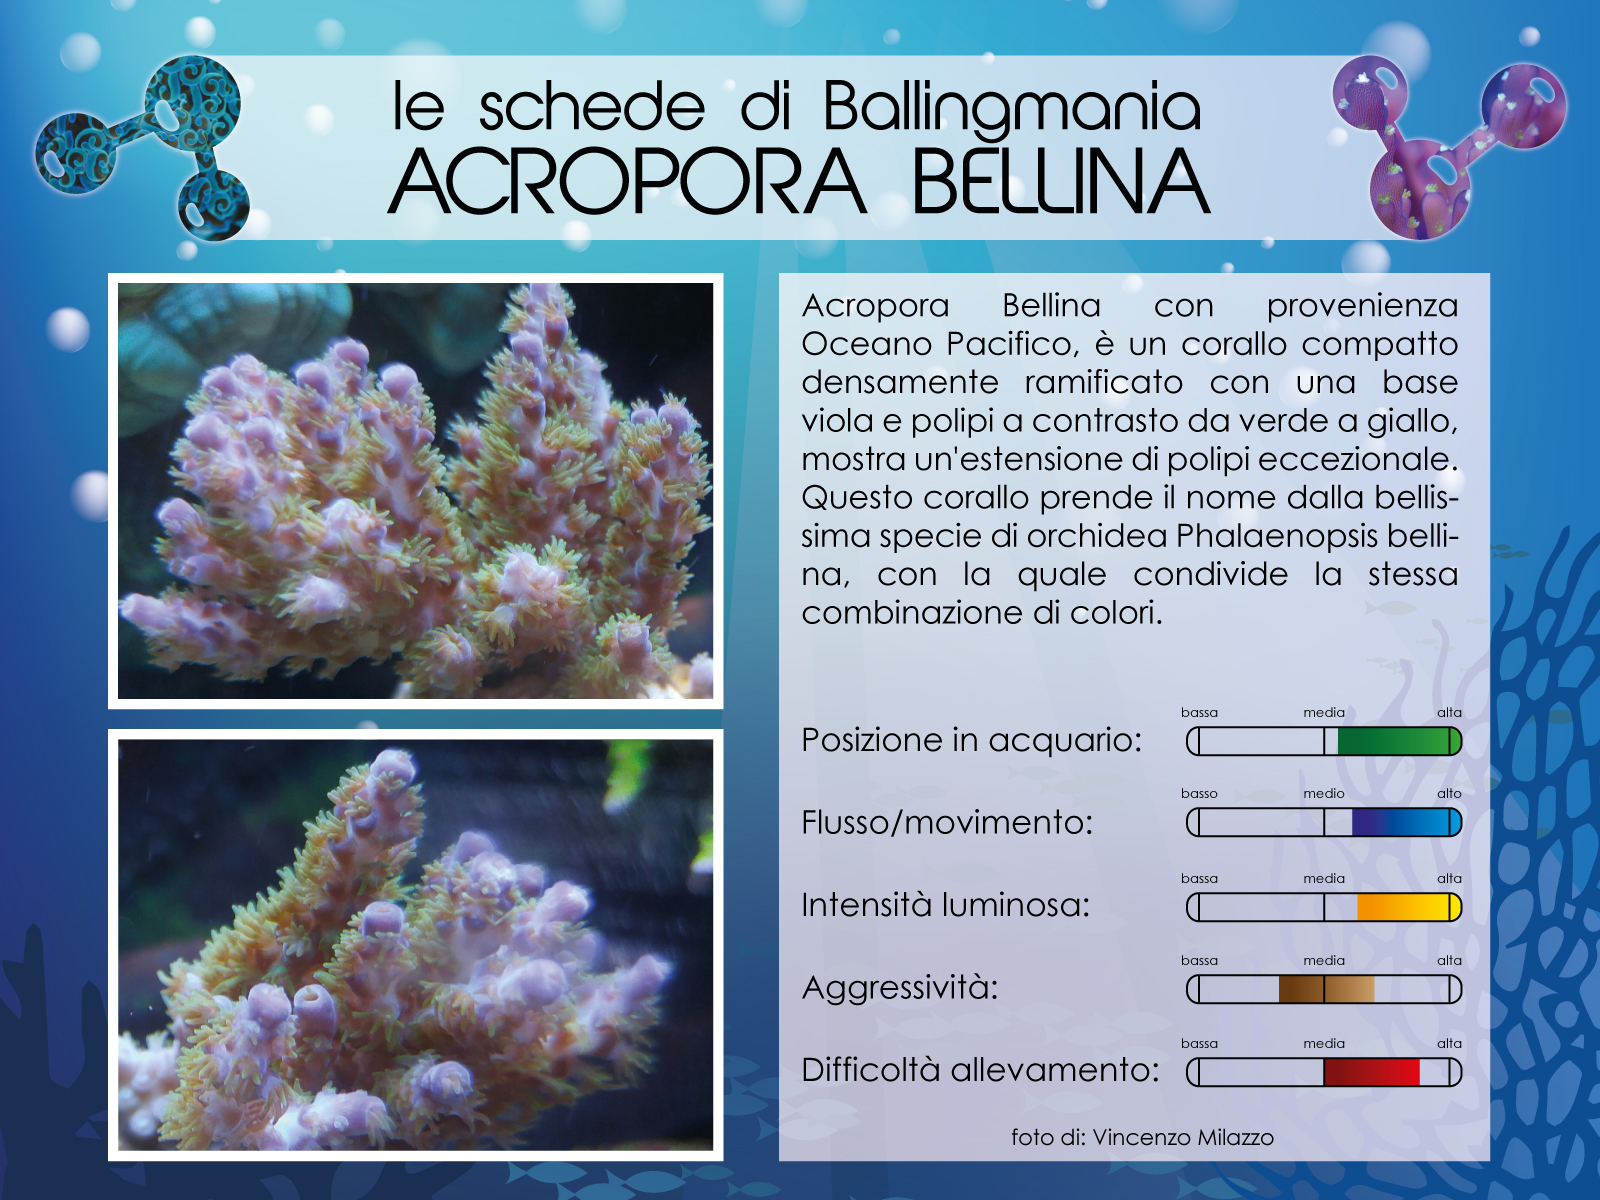 Acropora Bellina